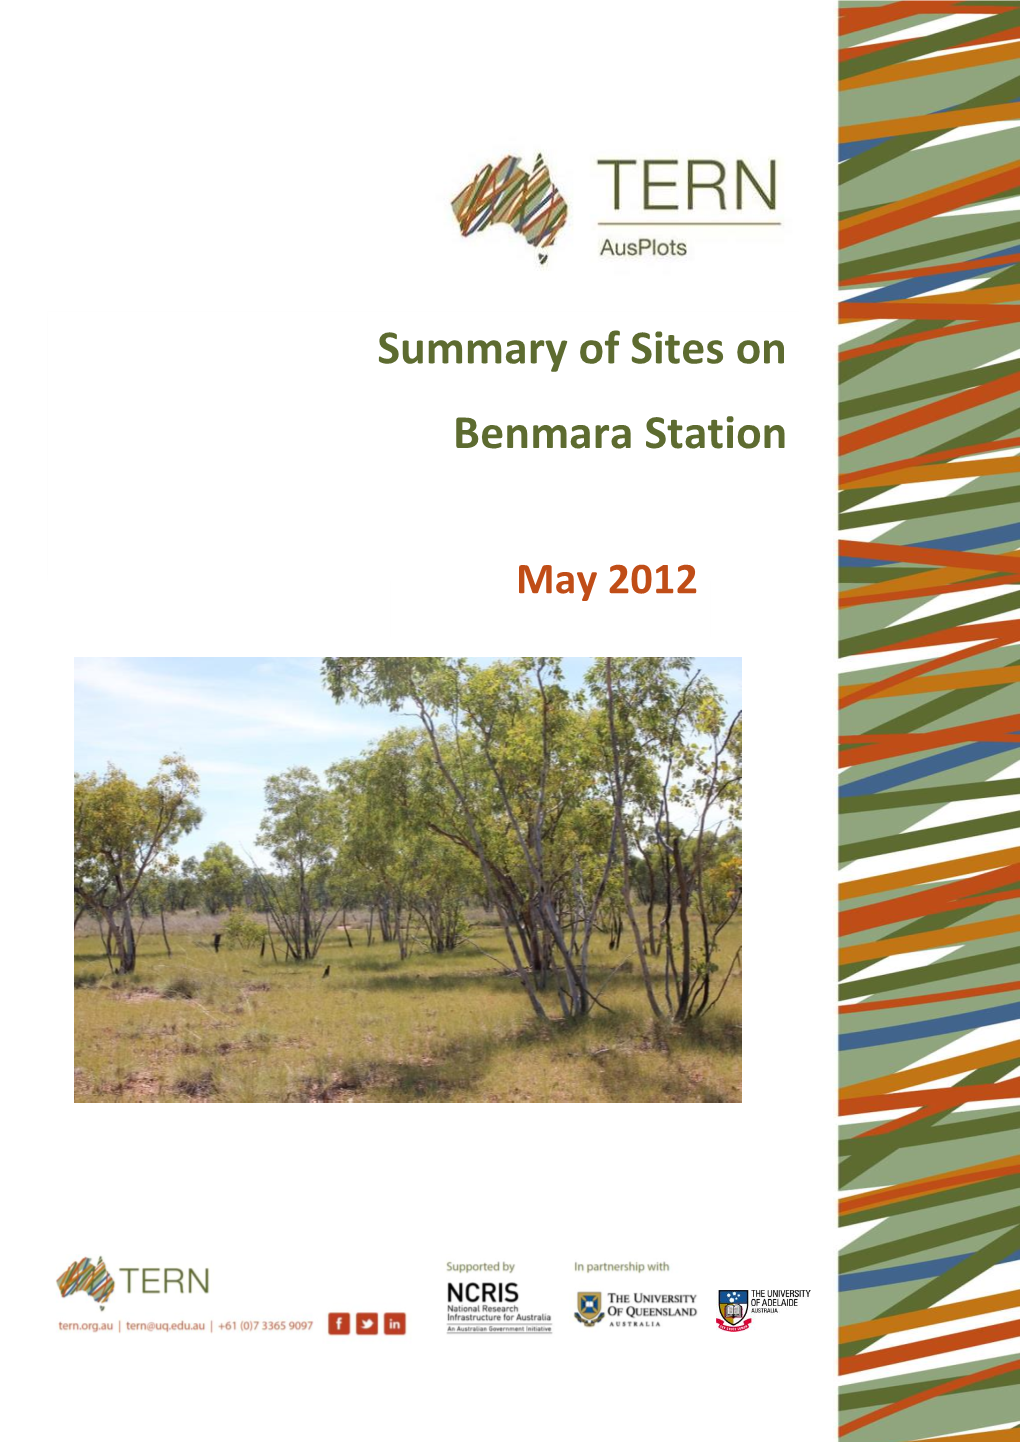 Summary of Sites on Benmara Station